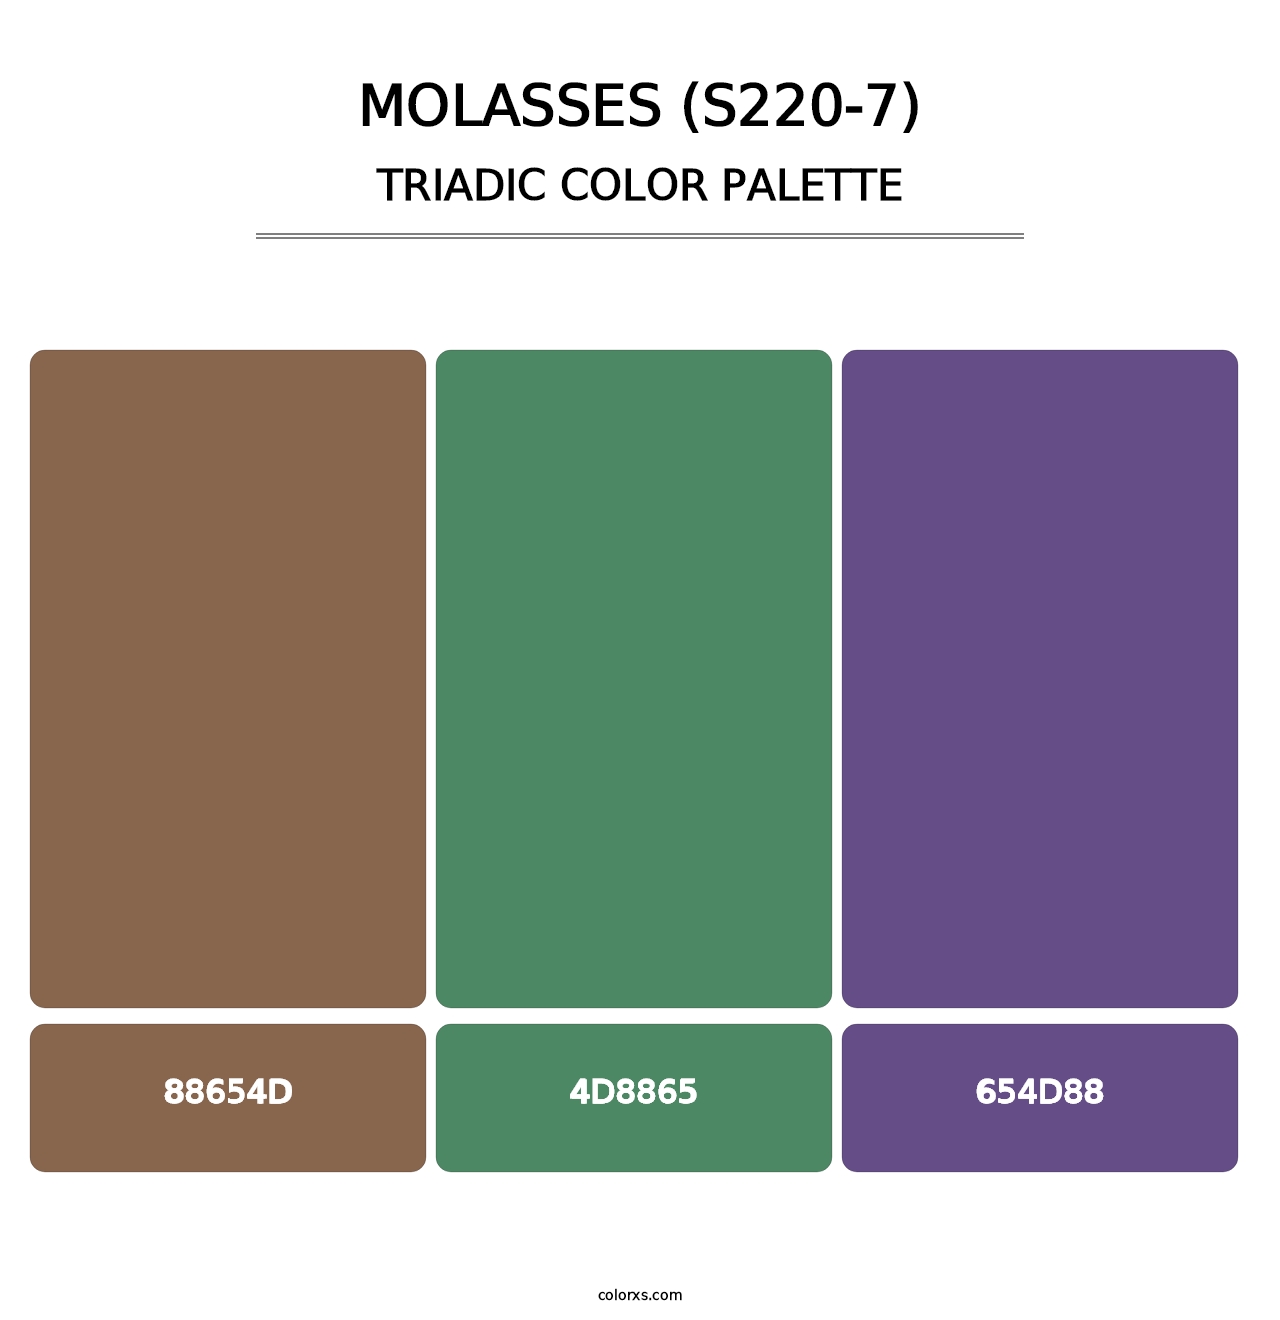 Molasses (S220-7) - Triadic Color Palette